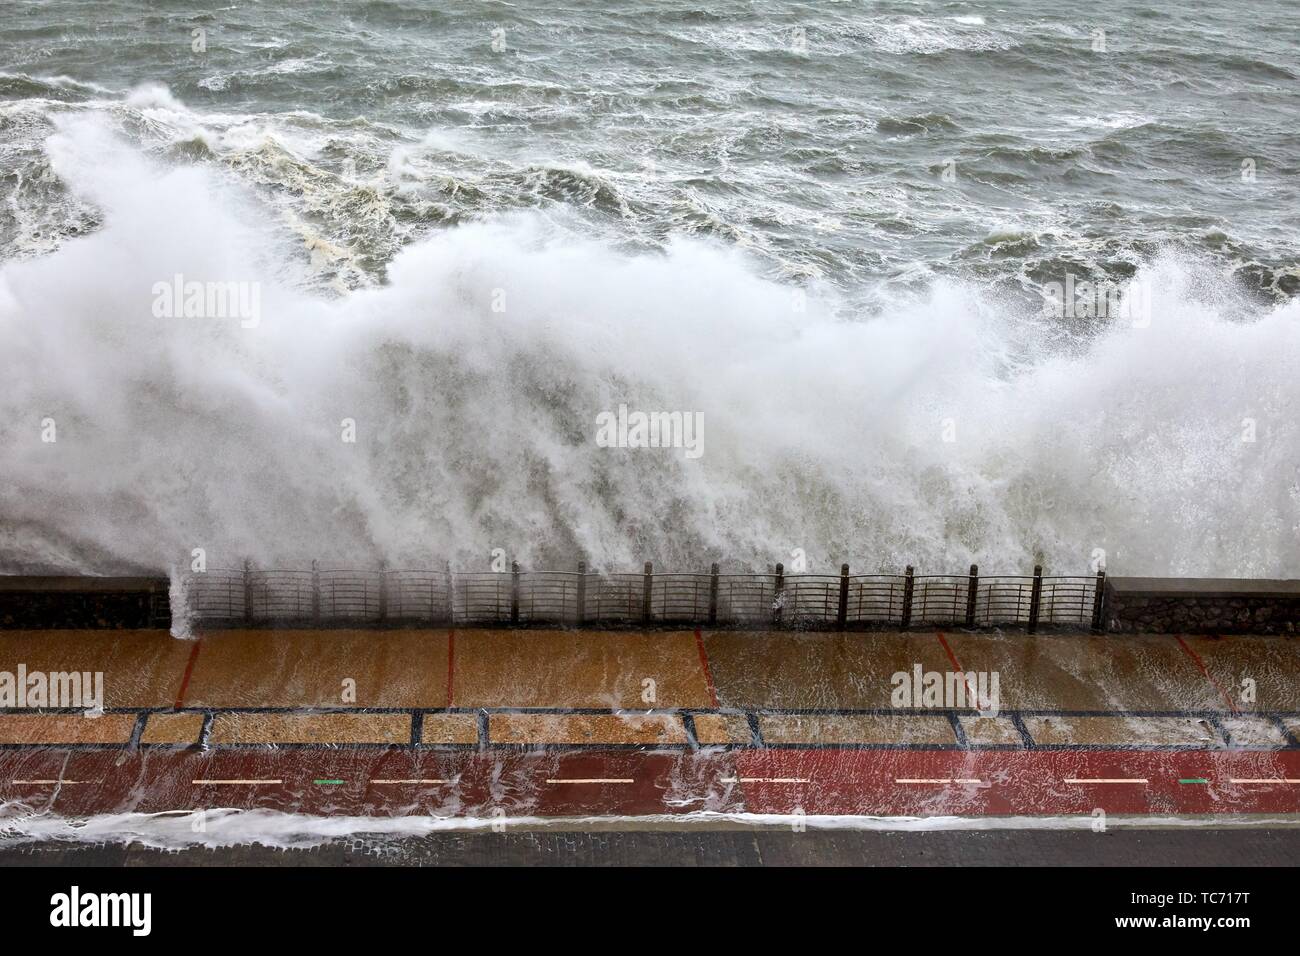 Tempest in the Cantabrian Sea, Waves and Wind, Explosive Cyclogenesis, Paseo Nuevo, Donostia, San Sebastian, Gipuzkoa, Basque Country, Spain Stock Photo